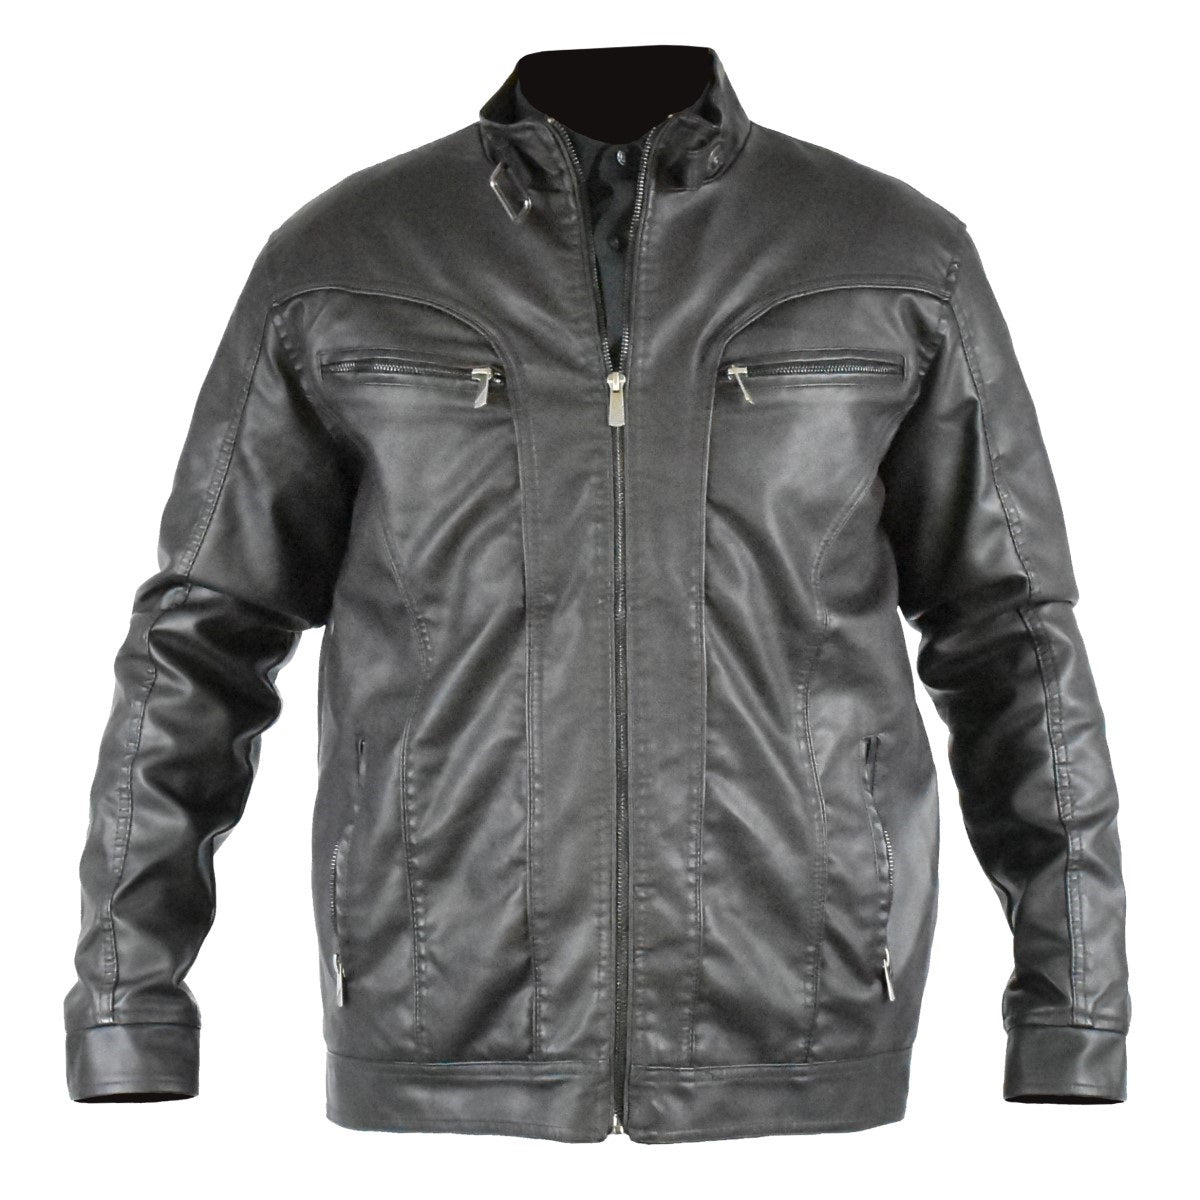 Chamarra para Hombre - TM-BG-828A Jacket for Men